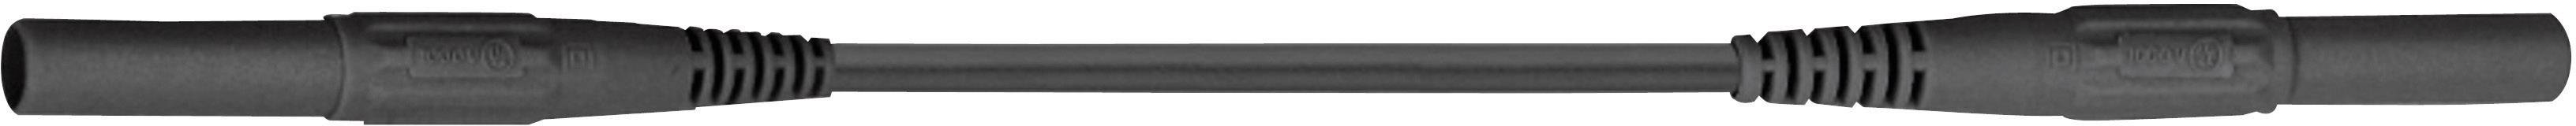 MULTICONTACT Sicherheits-Messleitung [ Lamellenstecker 4 mm - Lamellenstecker 4 mm] 1.50 m Schwarz M